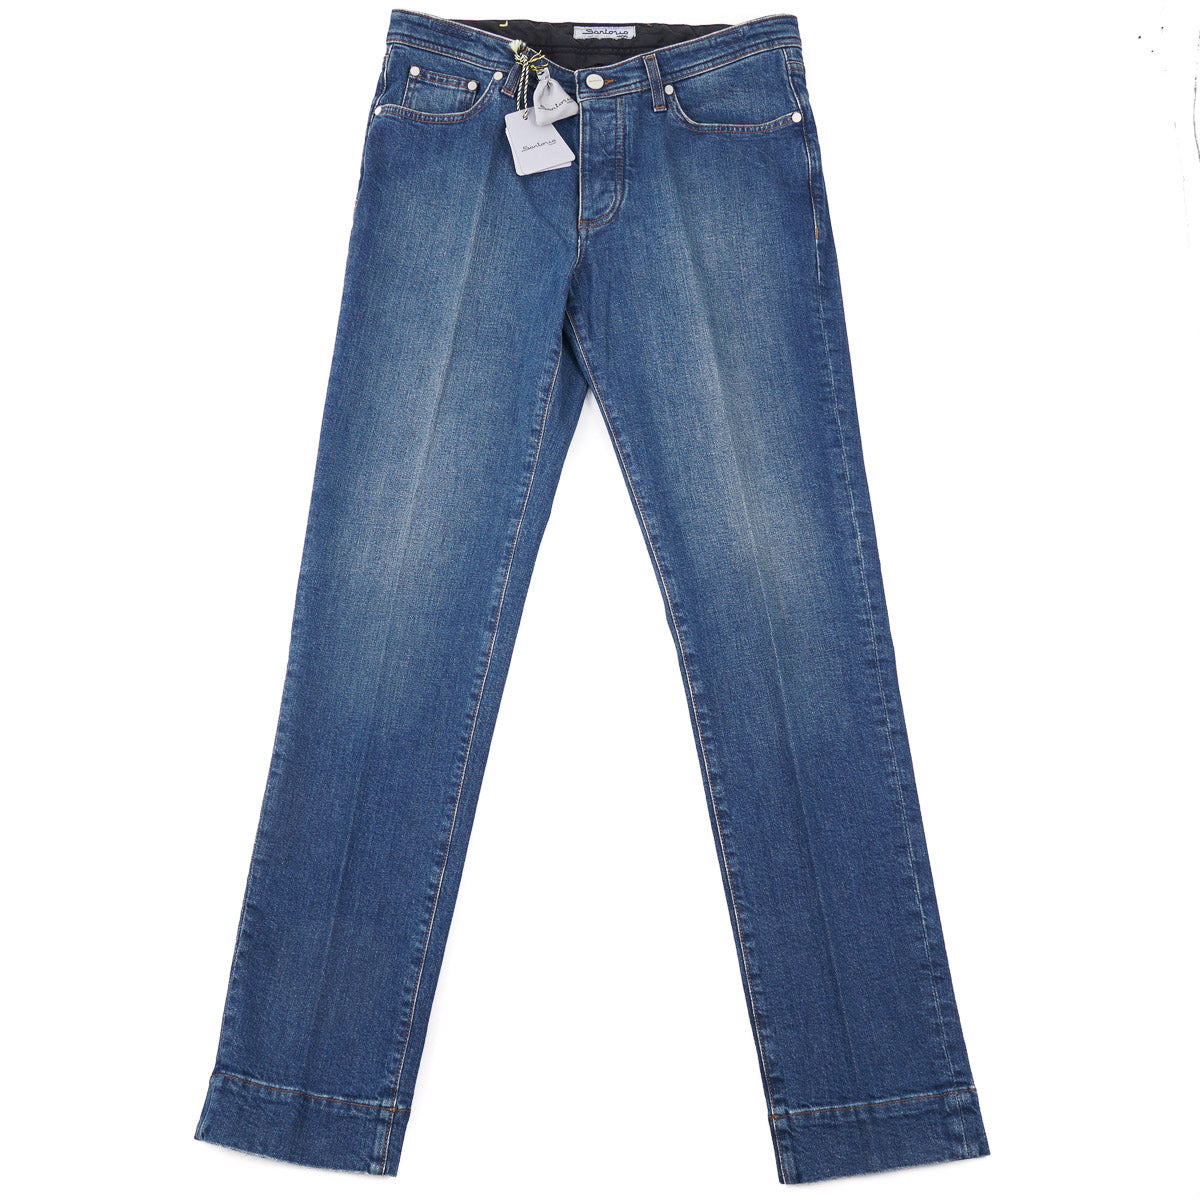 Sartorio Straight-Fit Denim Jeans - Top Shelf Apparel